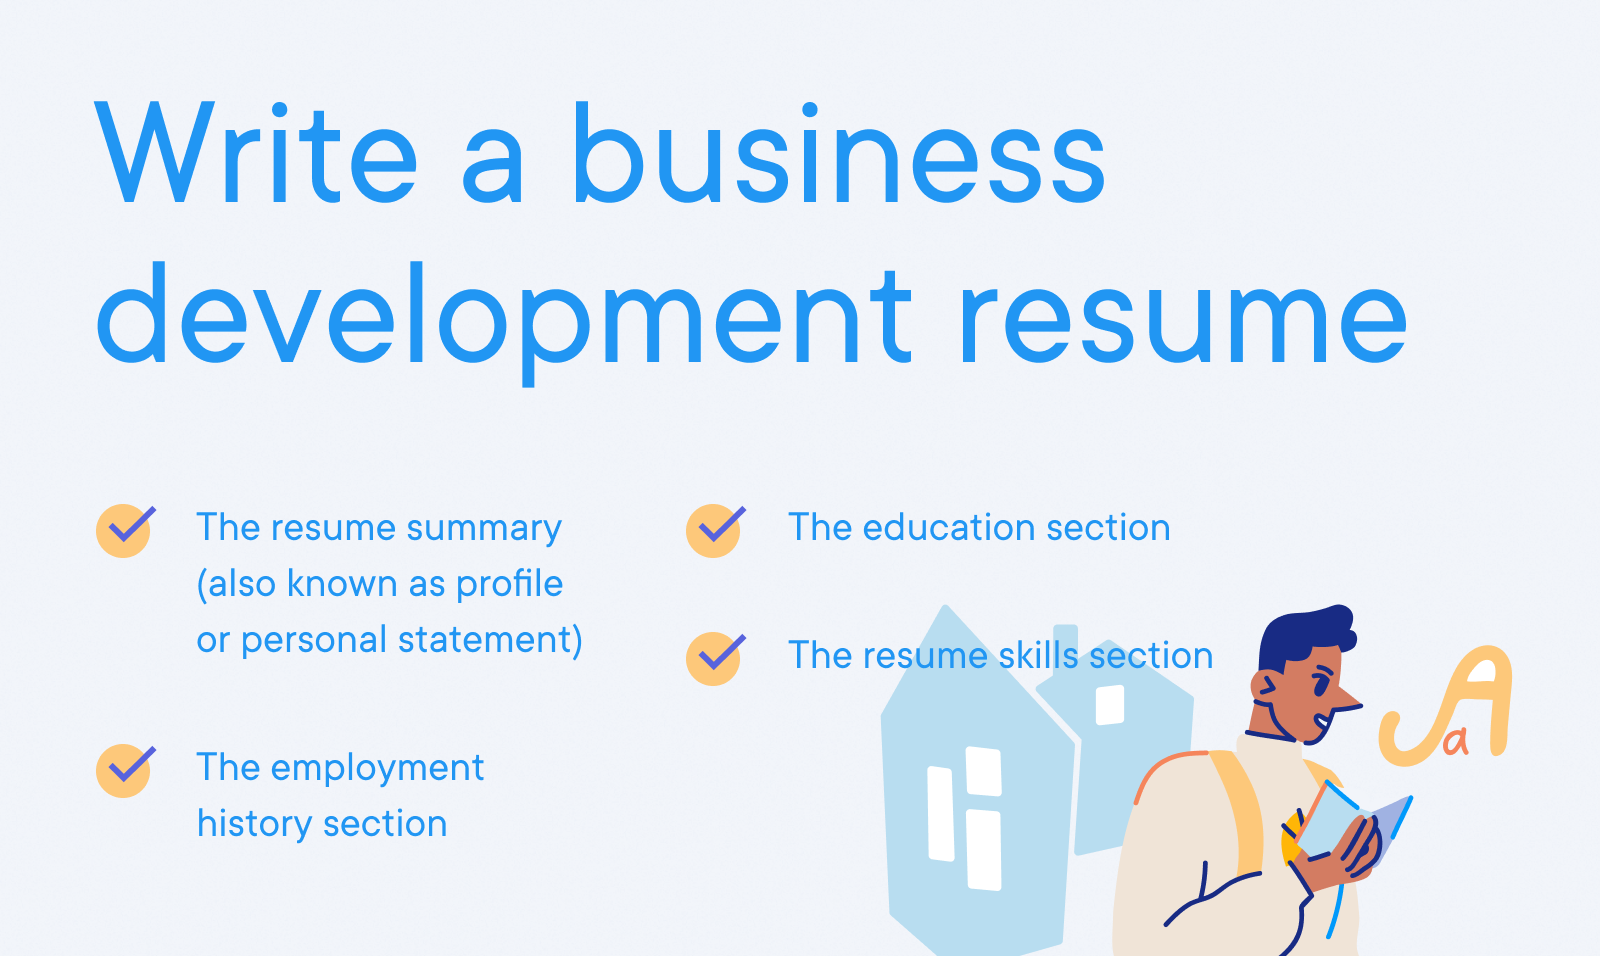 Business Development Manager - How to write a business development resume